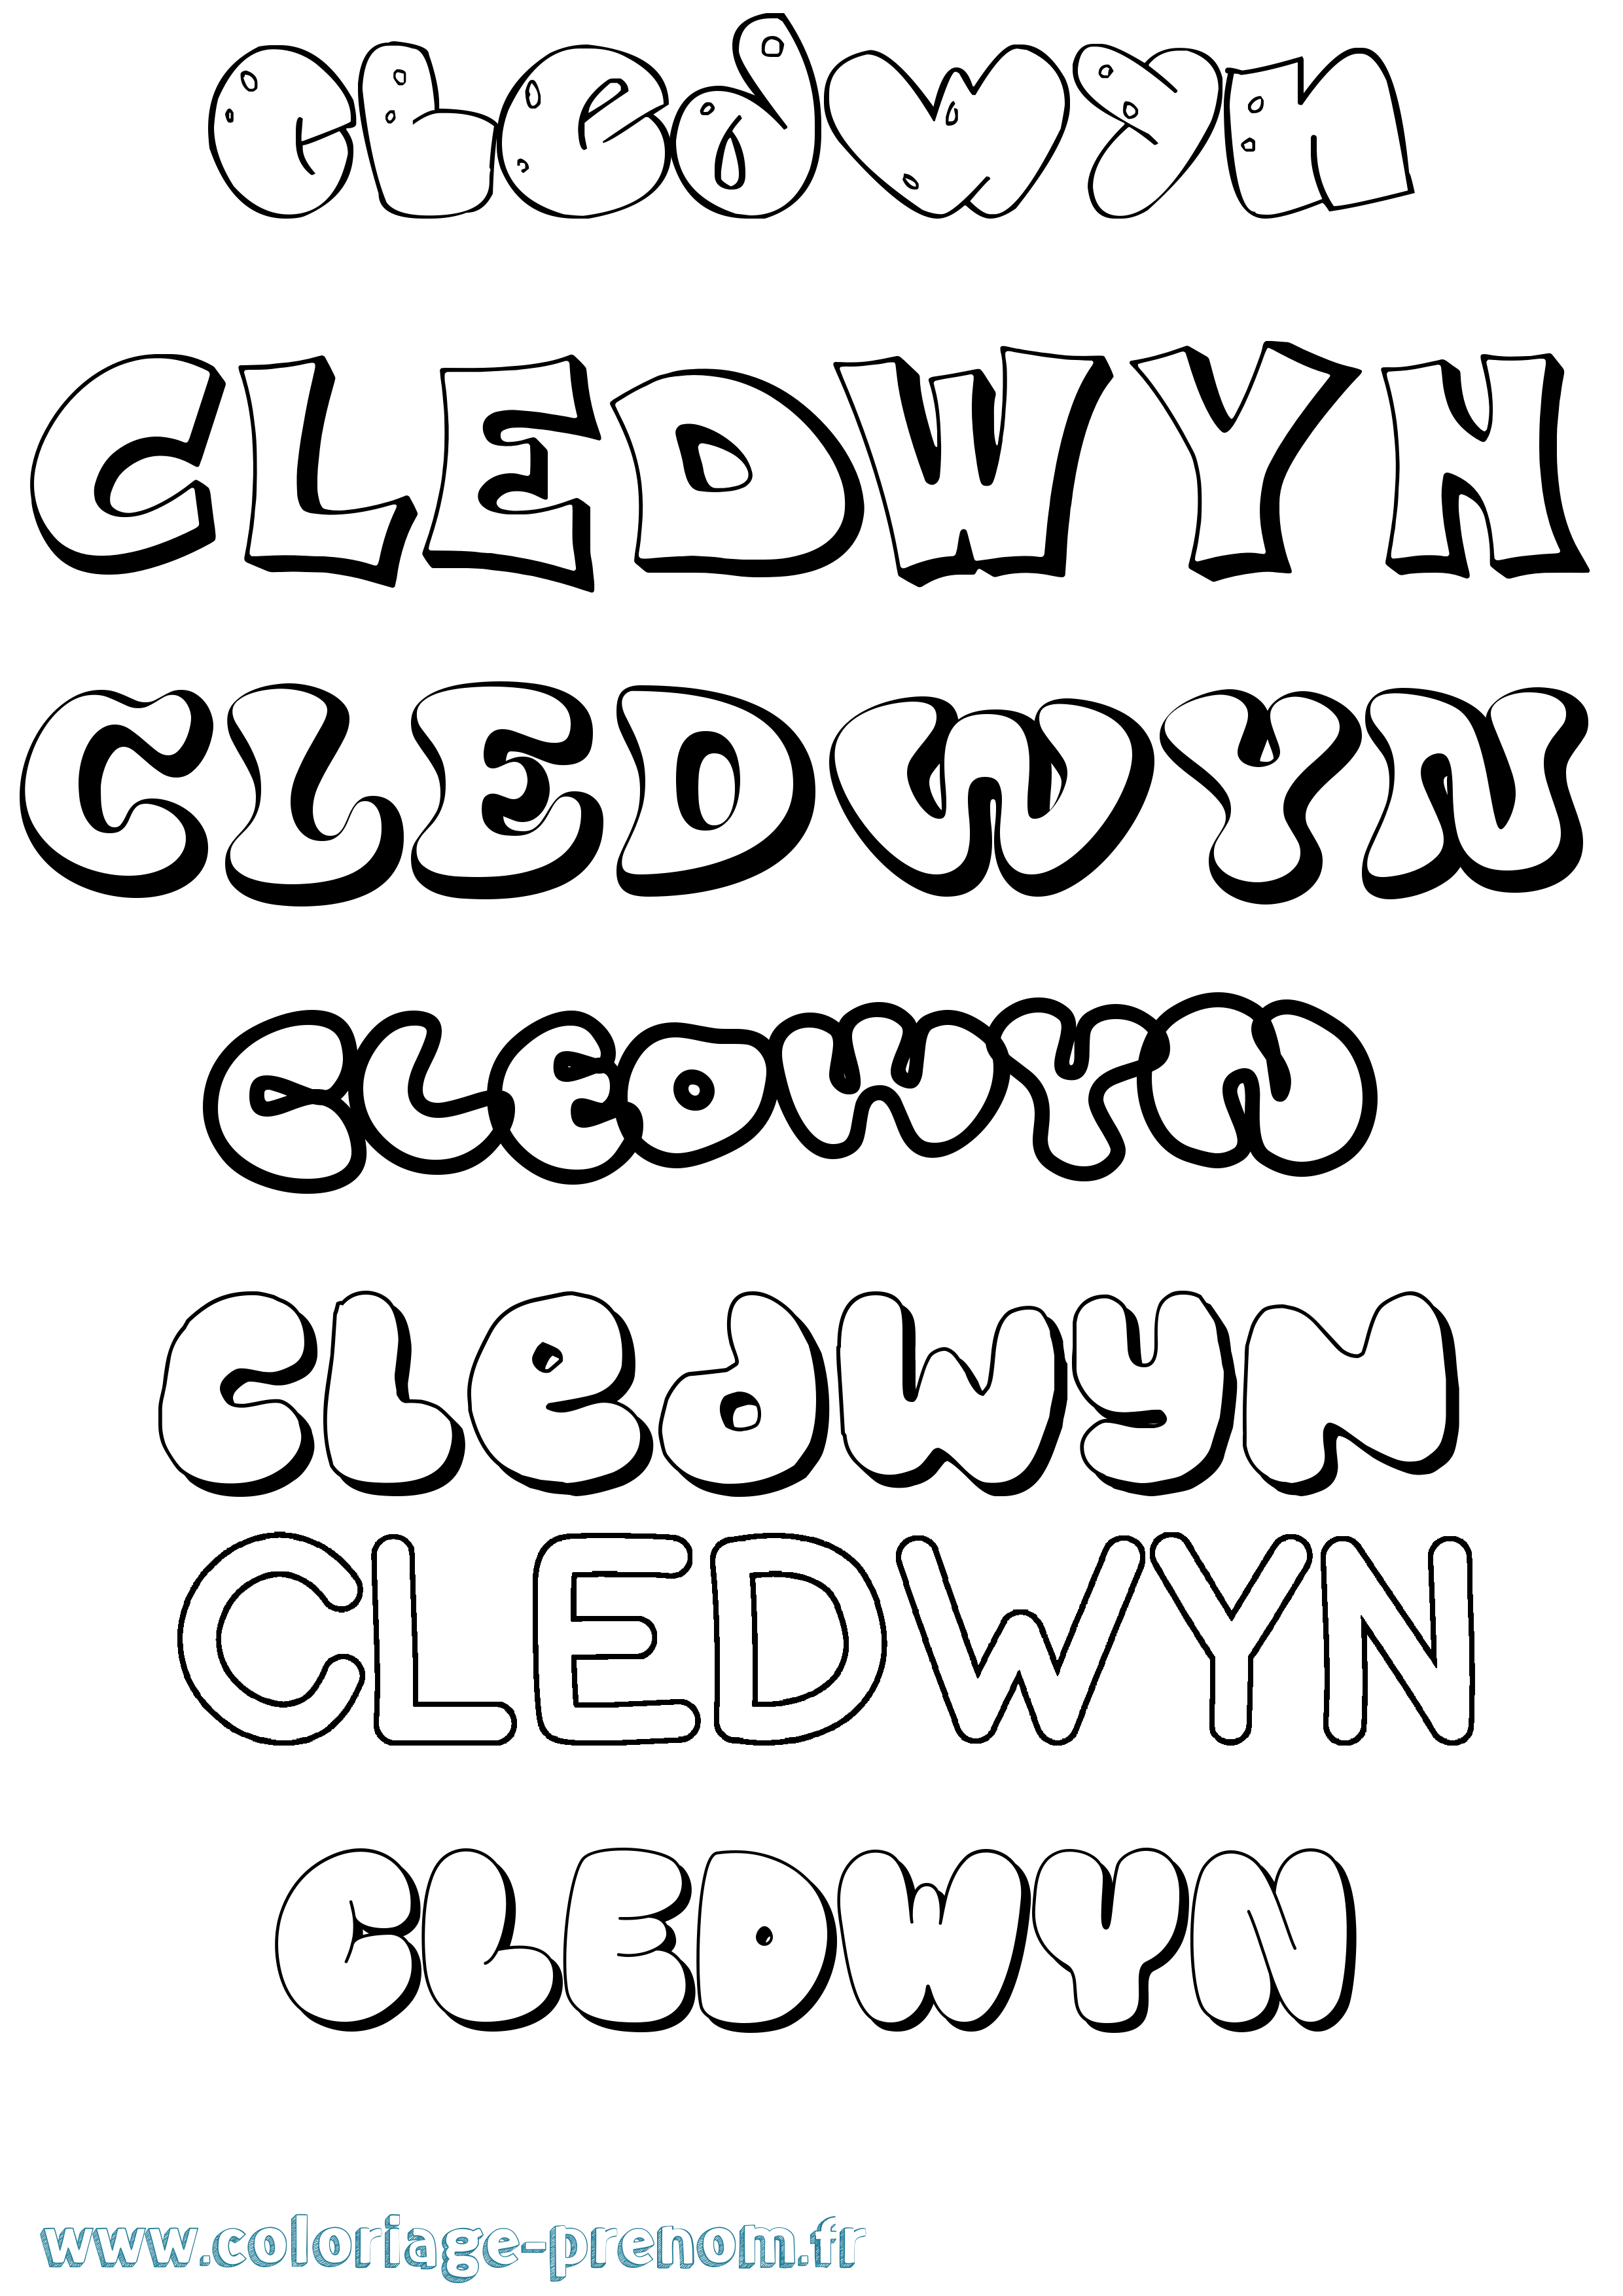 Coloriage prénom Cledwyn Bubble